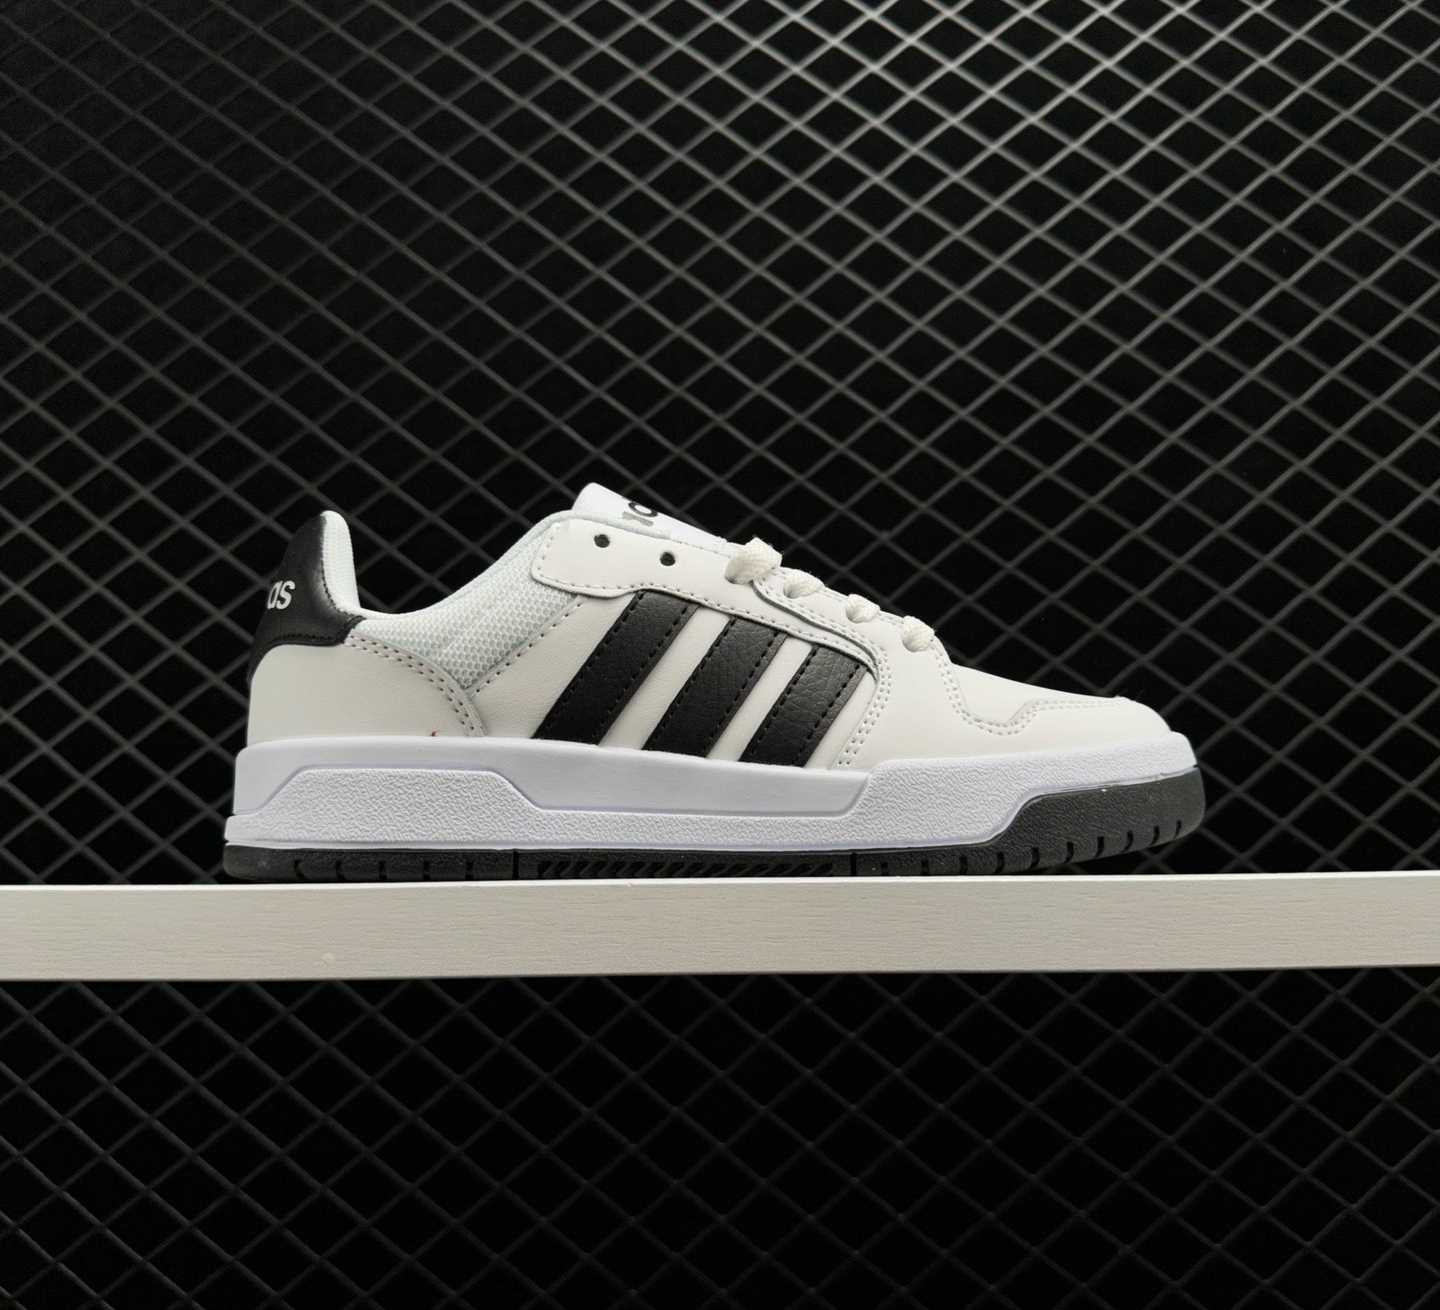 Adidas Neo Entrap White Black - Sleek and Stylish Athletic Sneakers